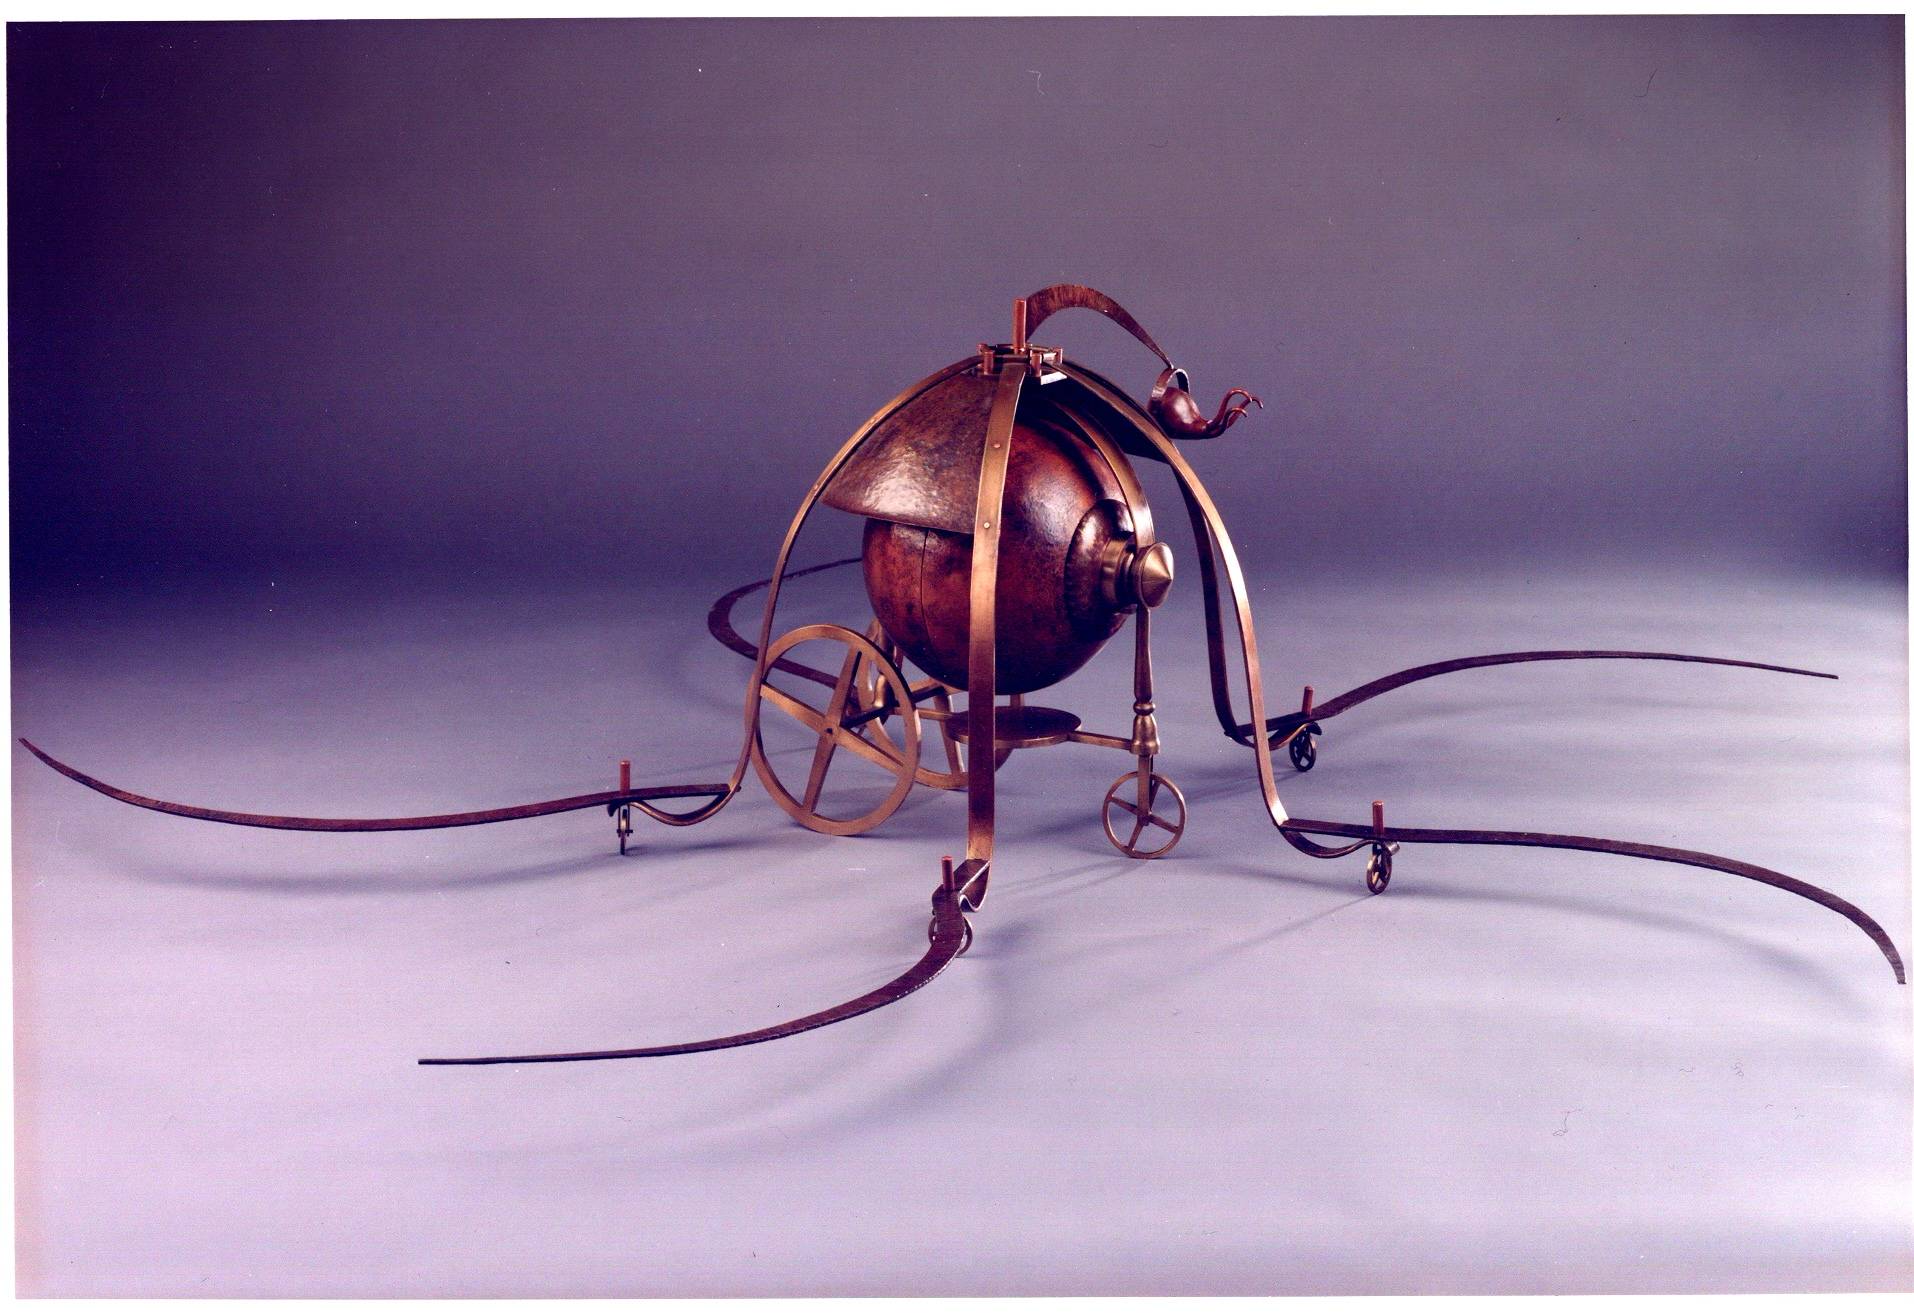 cast bronze sphere with spider scythe legs